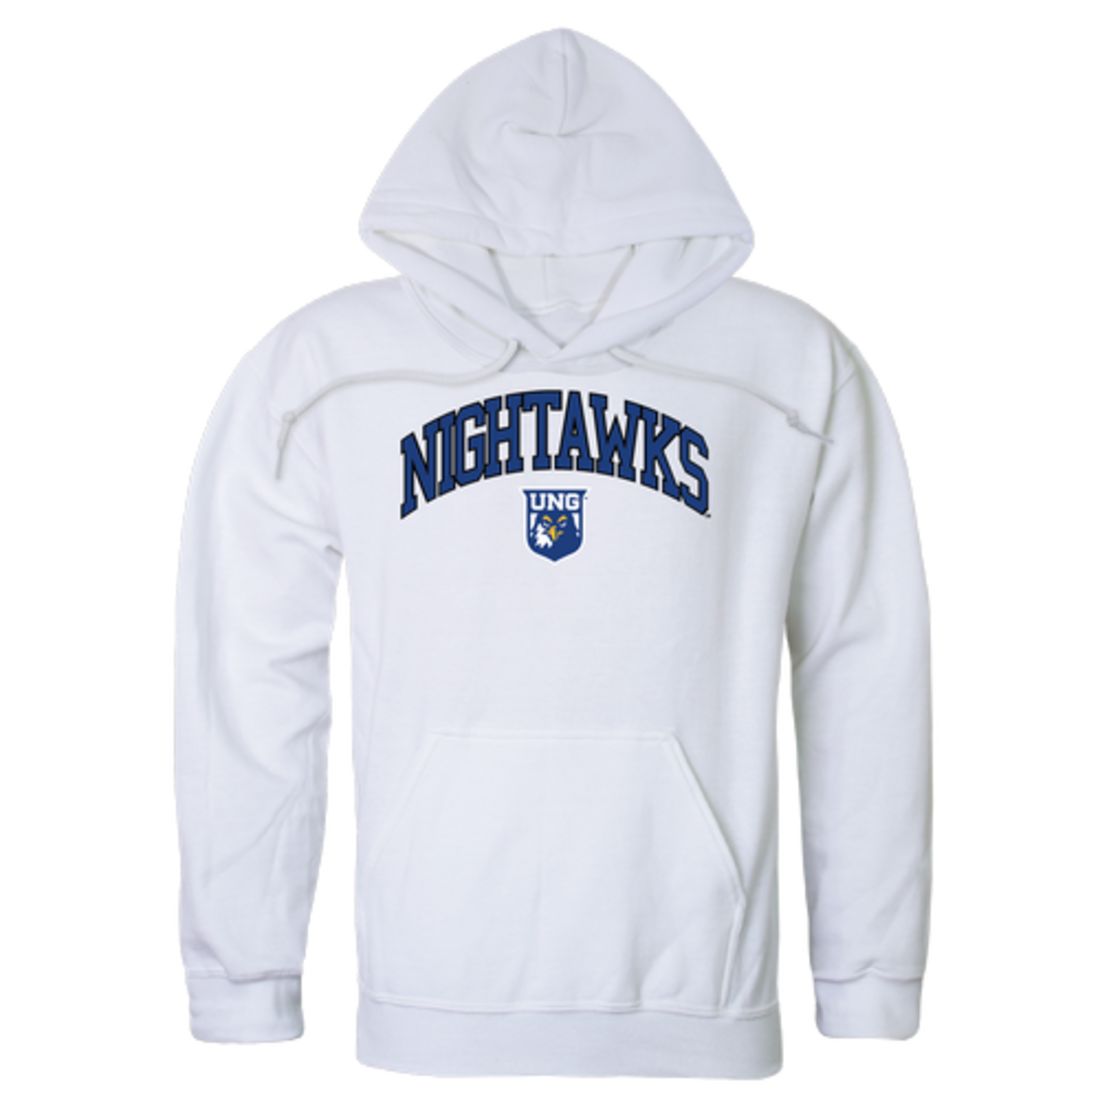 University-of-North-Georgia-Nighthawks-Campus-Fleece-Hoodie-Sweatshirts